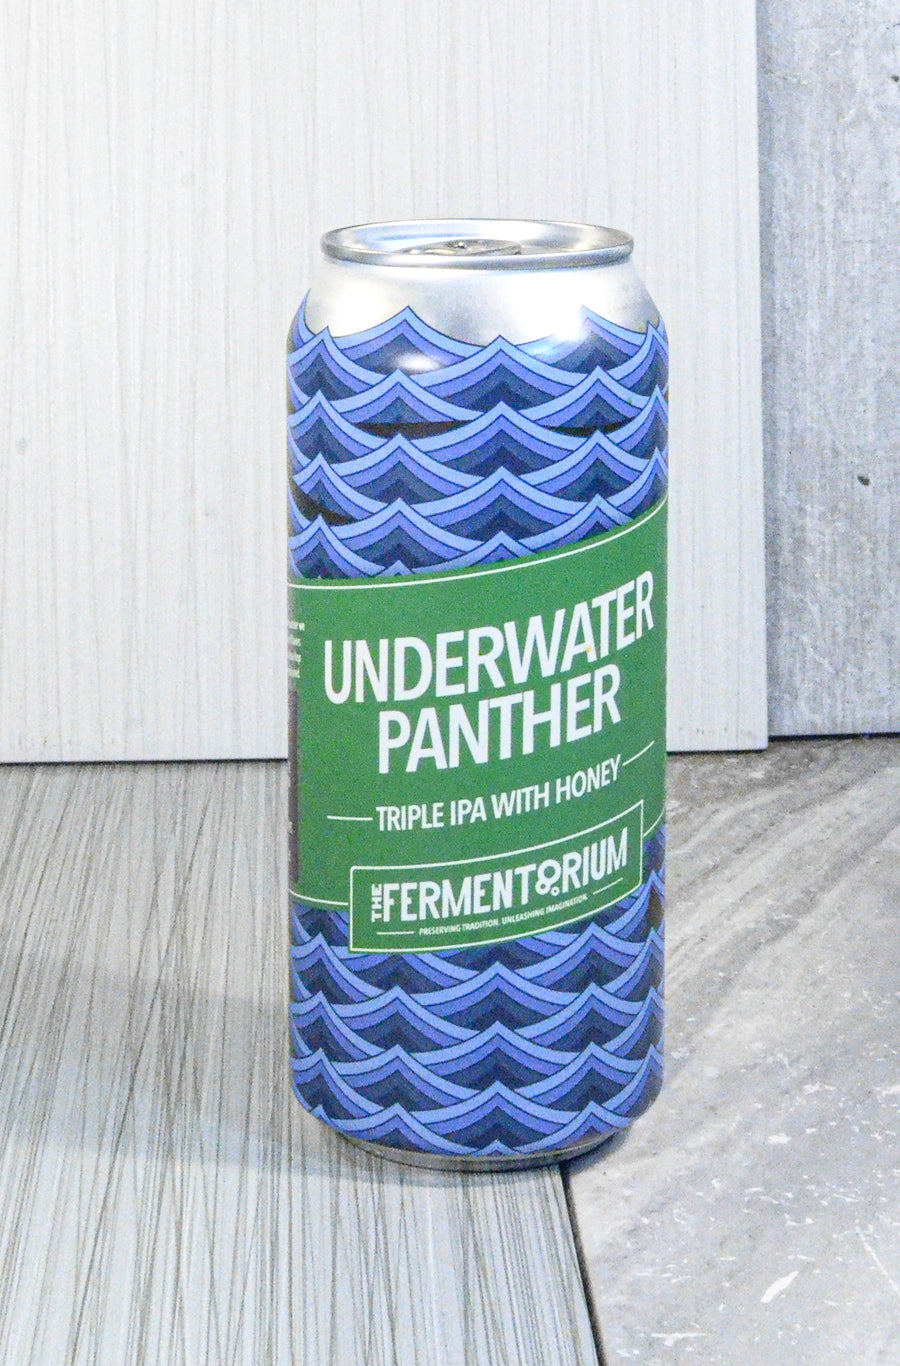 The Fermentorium, Underwater Panther Triple IPA SINGLE